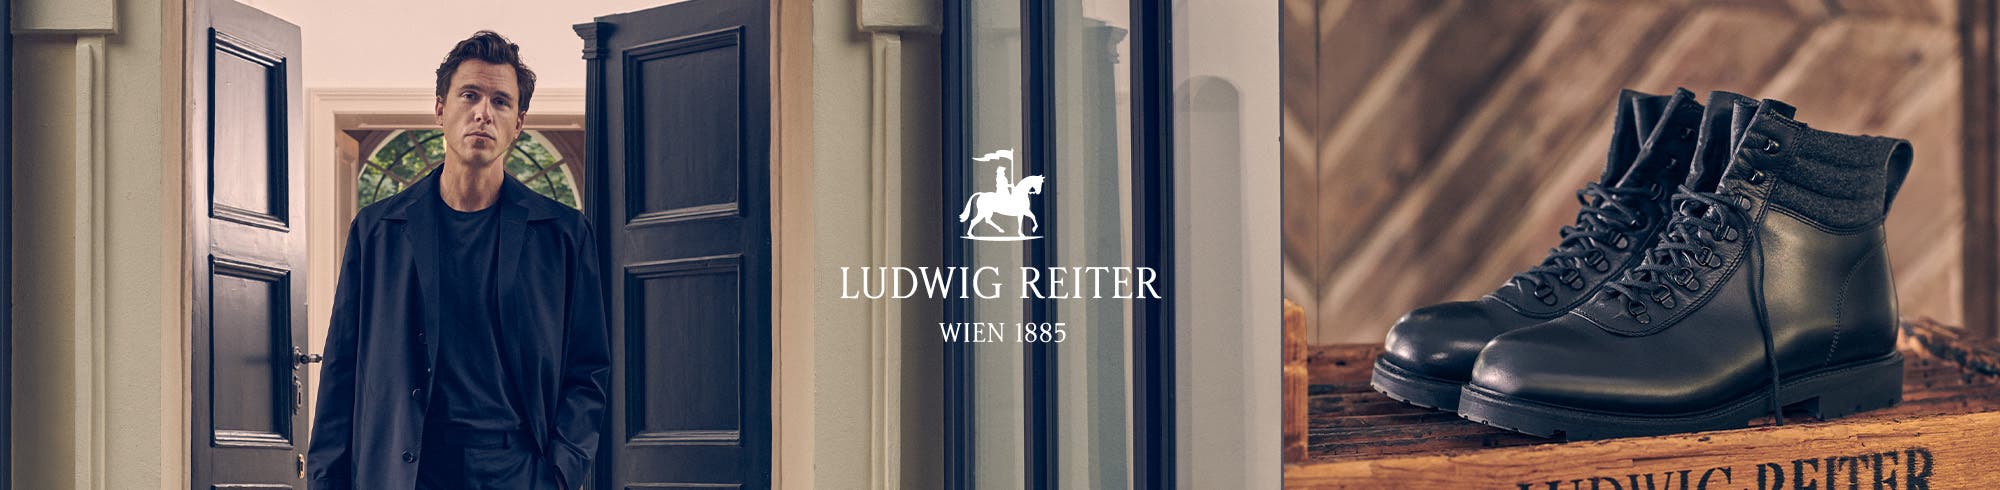 Ludwig Reiter Herren Business 30-70%* günstiger » SALE im OUTLET Online Shop